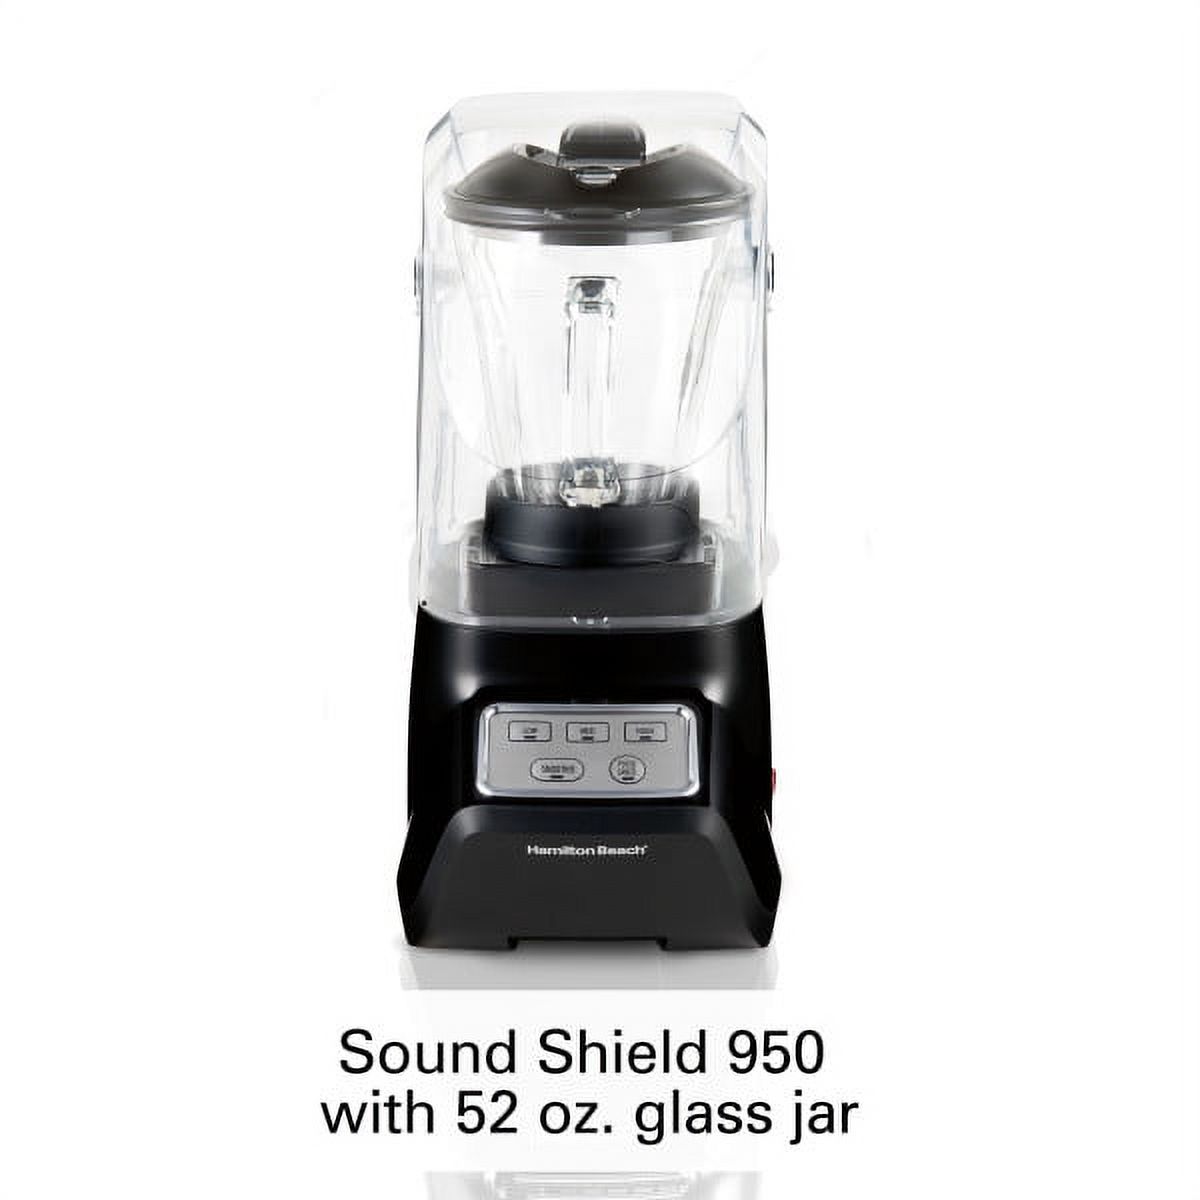 Hamilton Beach Sound Shield 950 Watt 52 oz Countertop Food Blender Mixer, Black - image 3 of 6